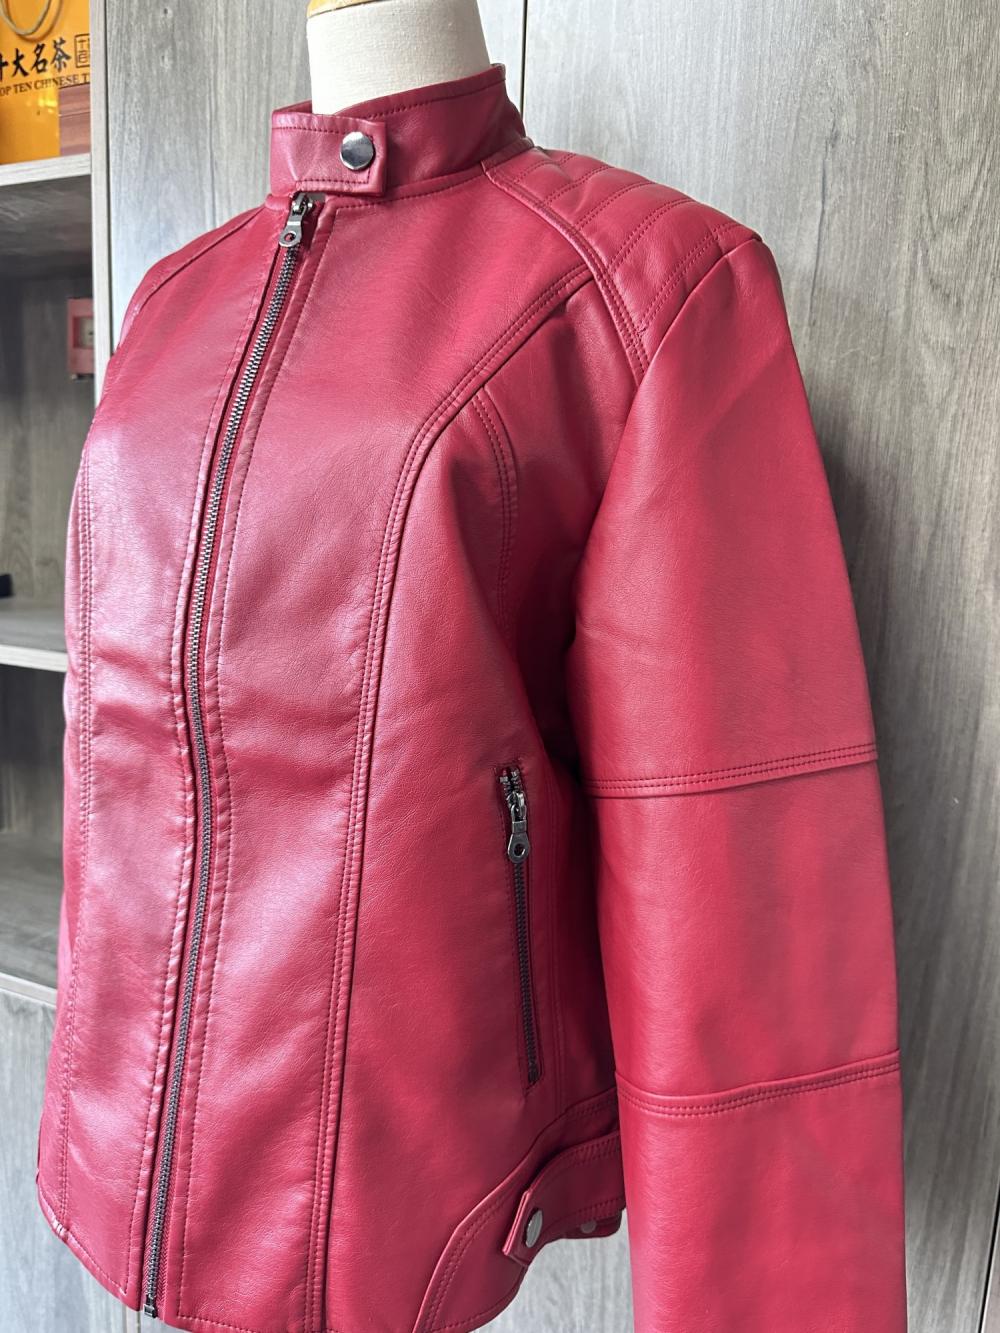 Autumn Custom Outdoor PU Leather Jacket For Women